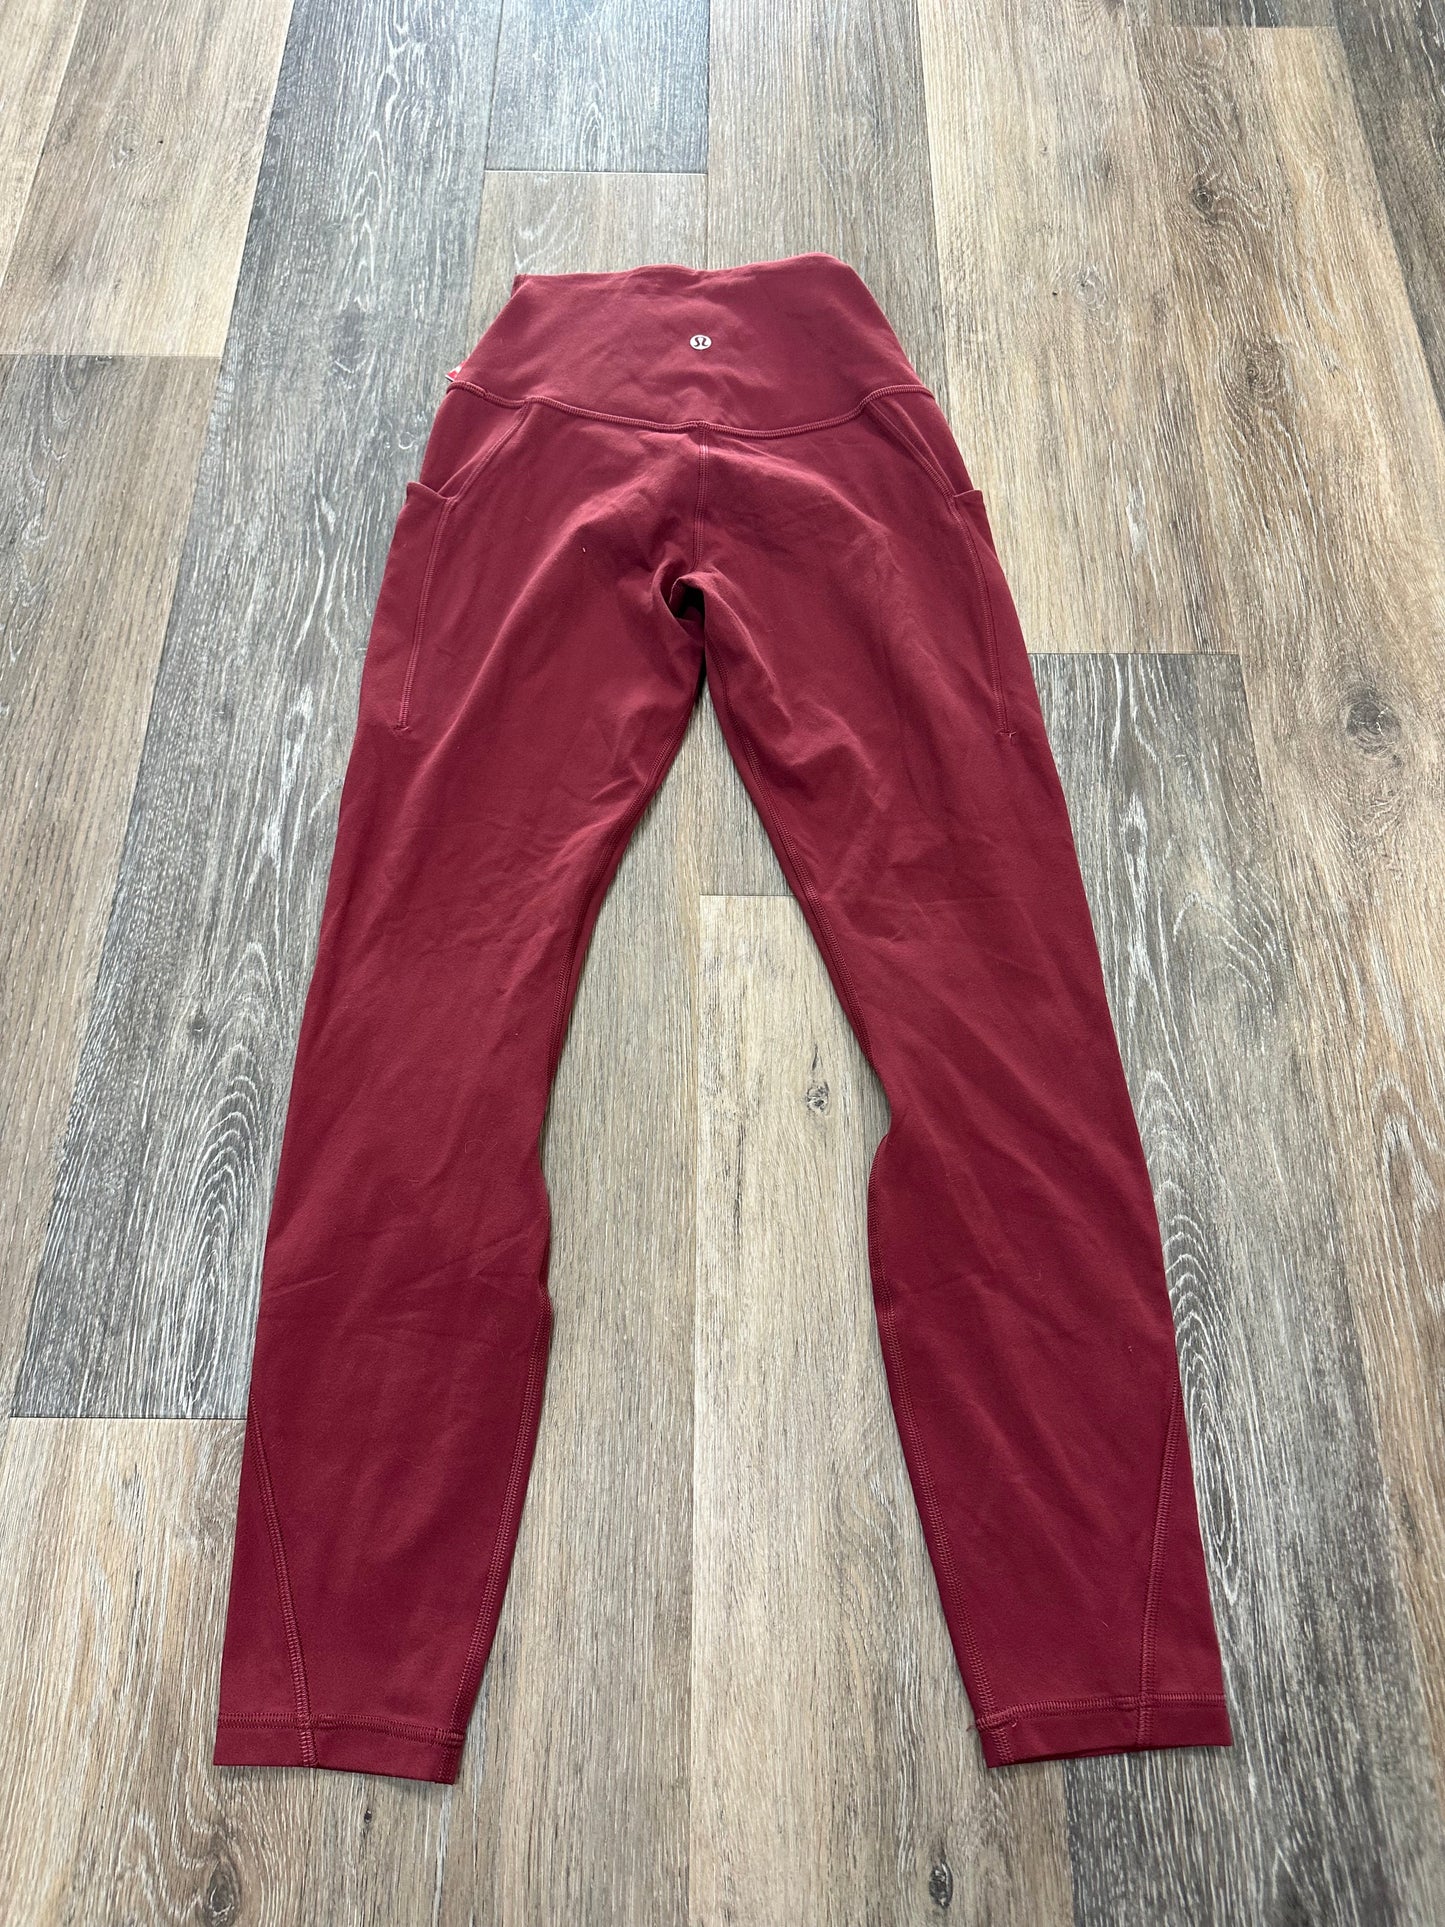 Red Athletic Pants Lululemon, Size 4